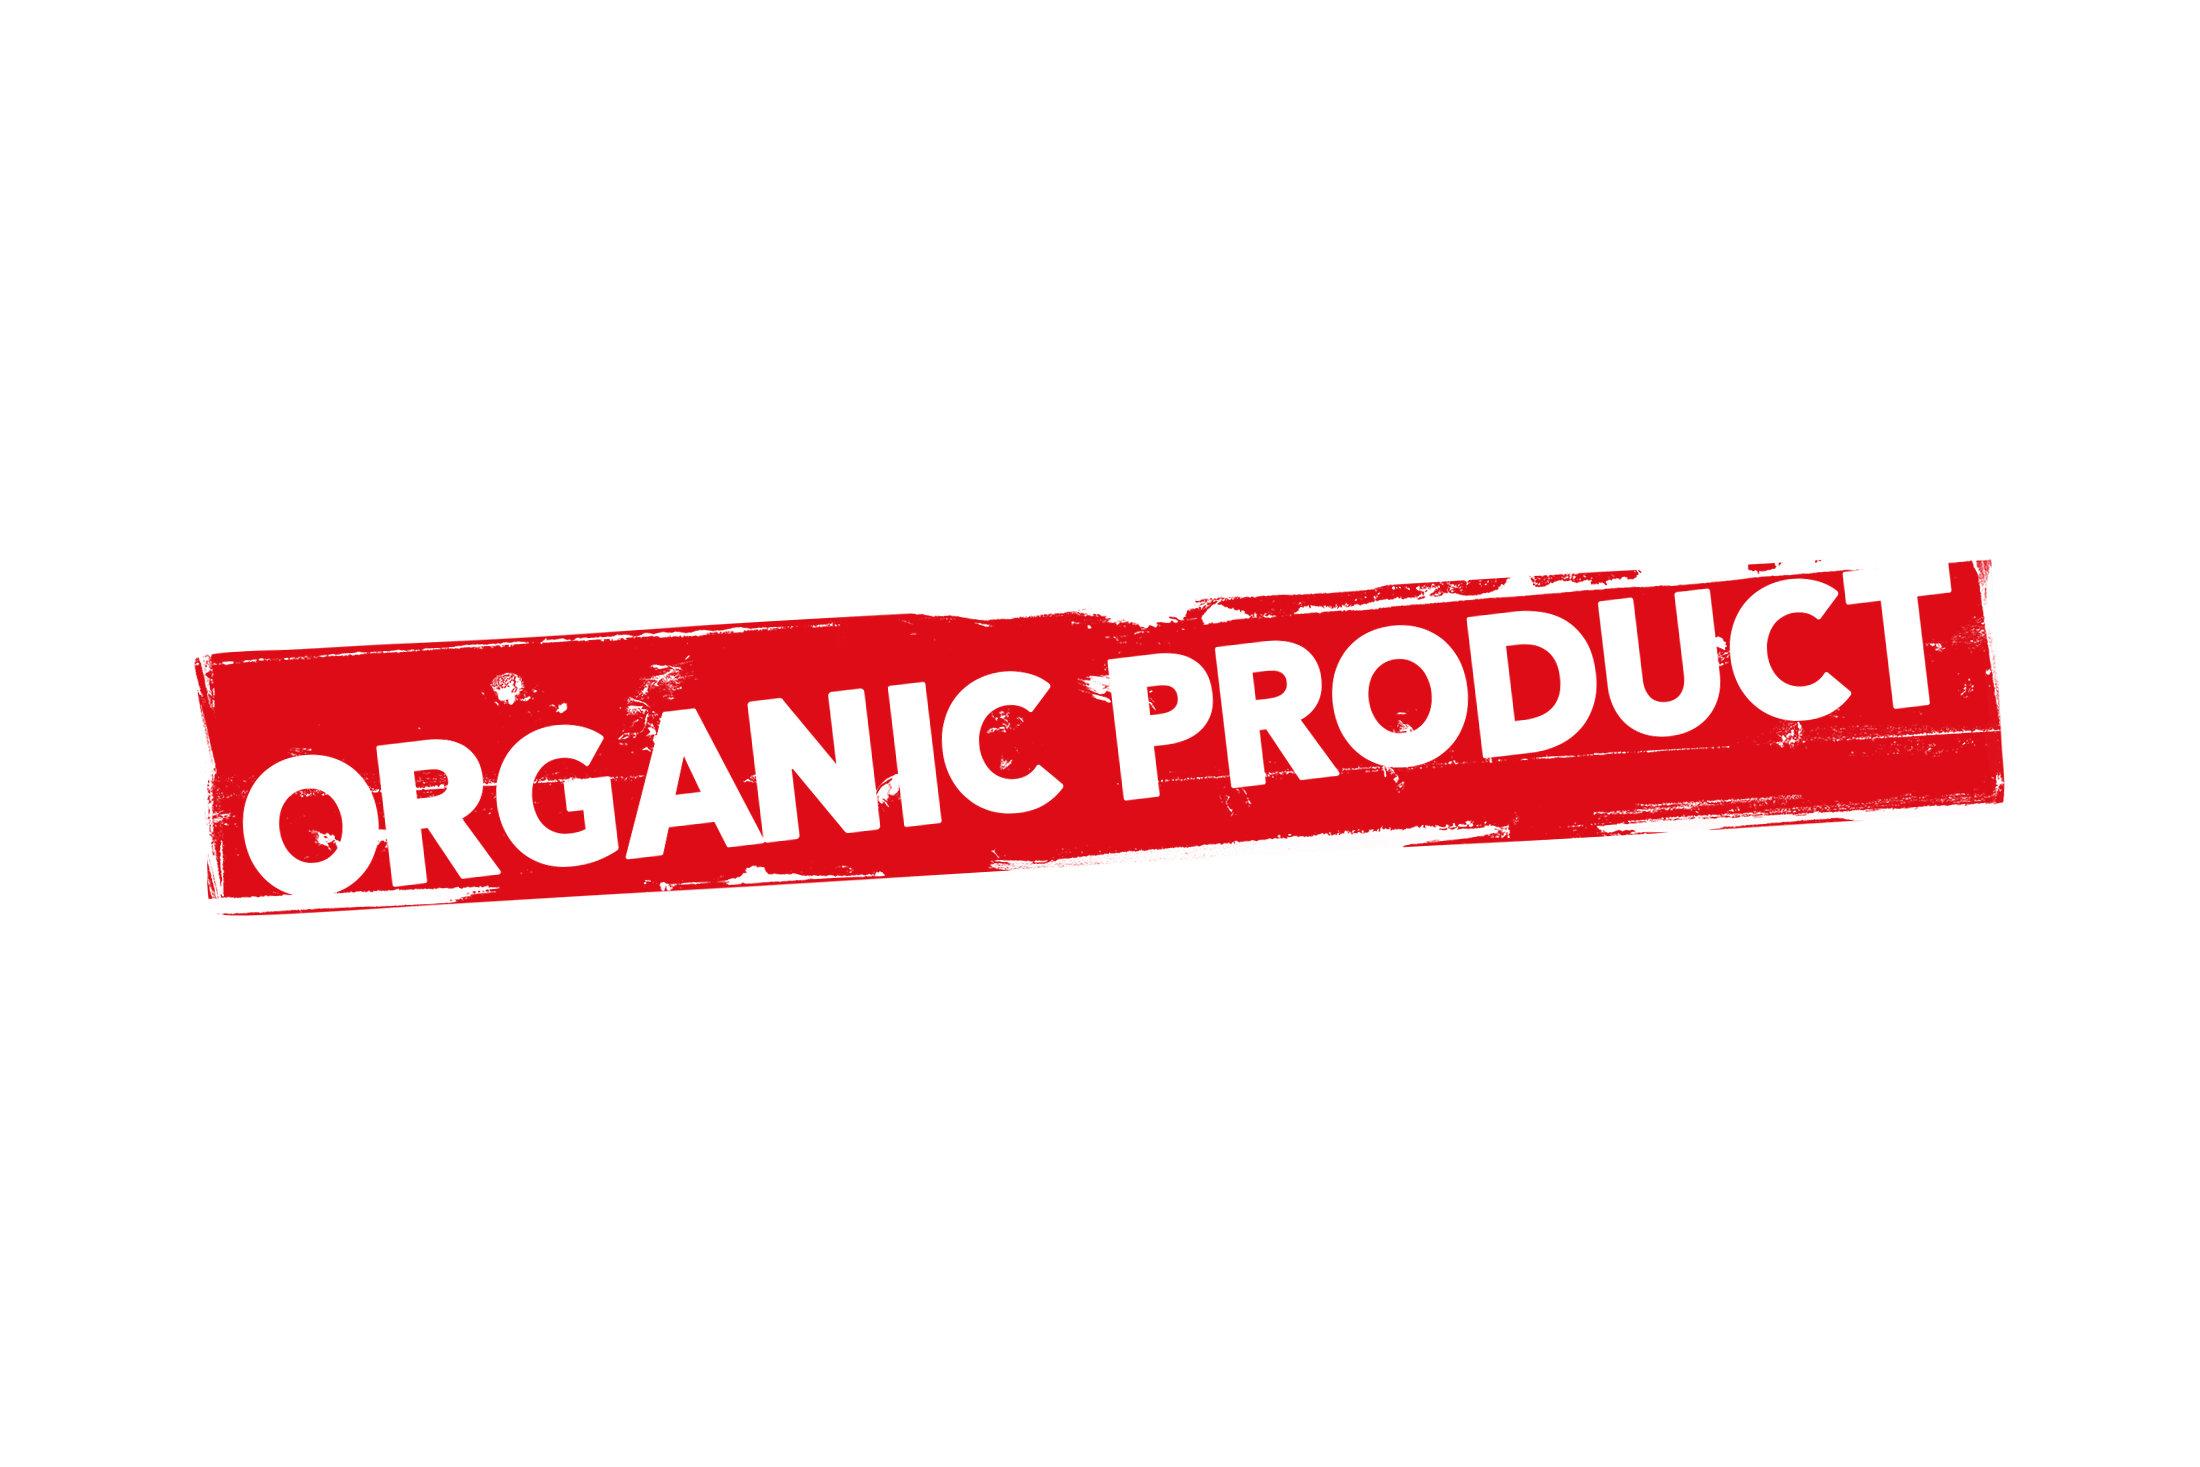 Grunge organic product label PSD